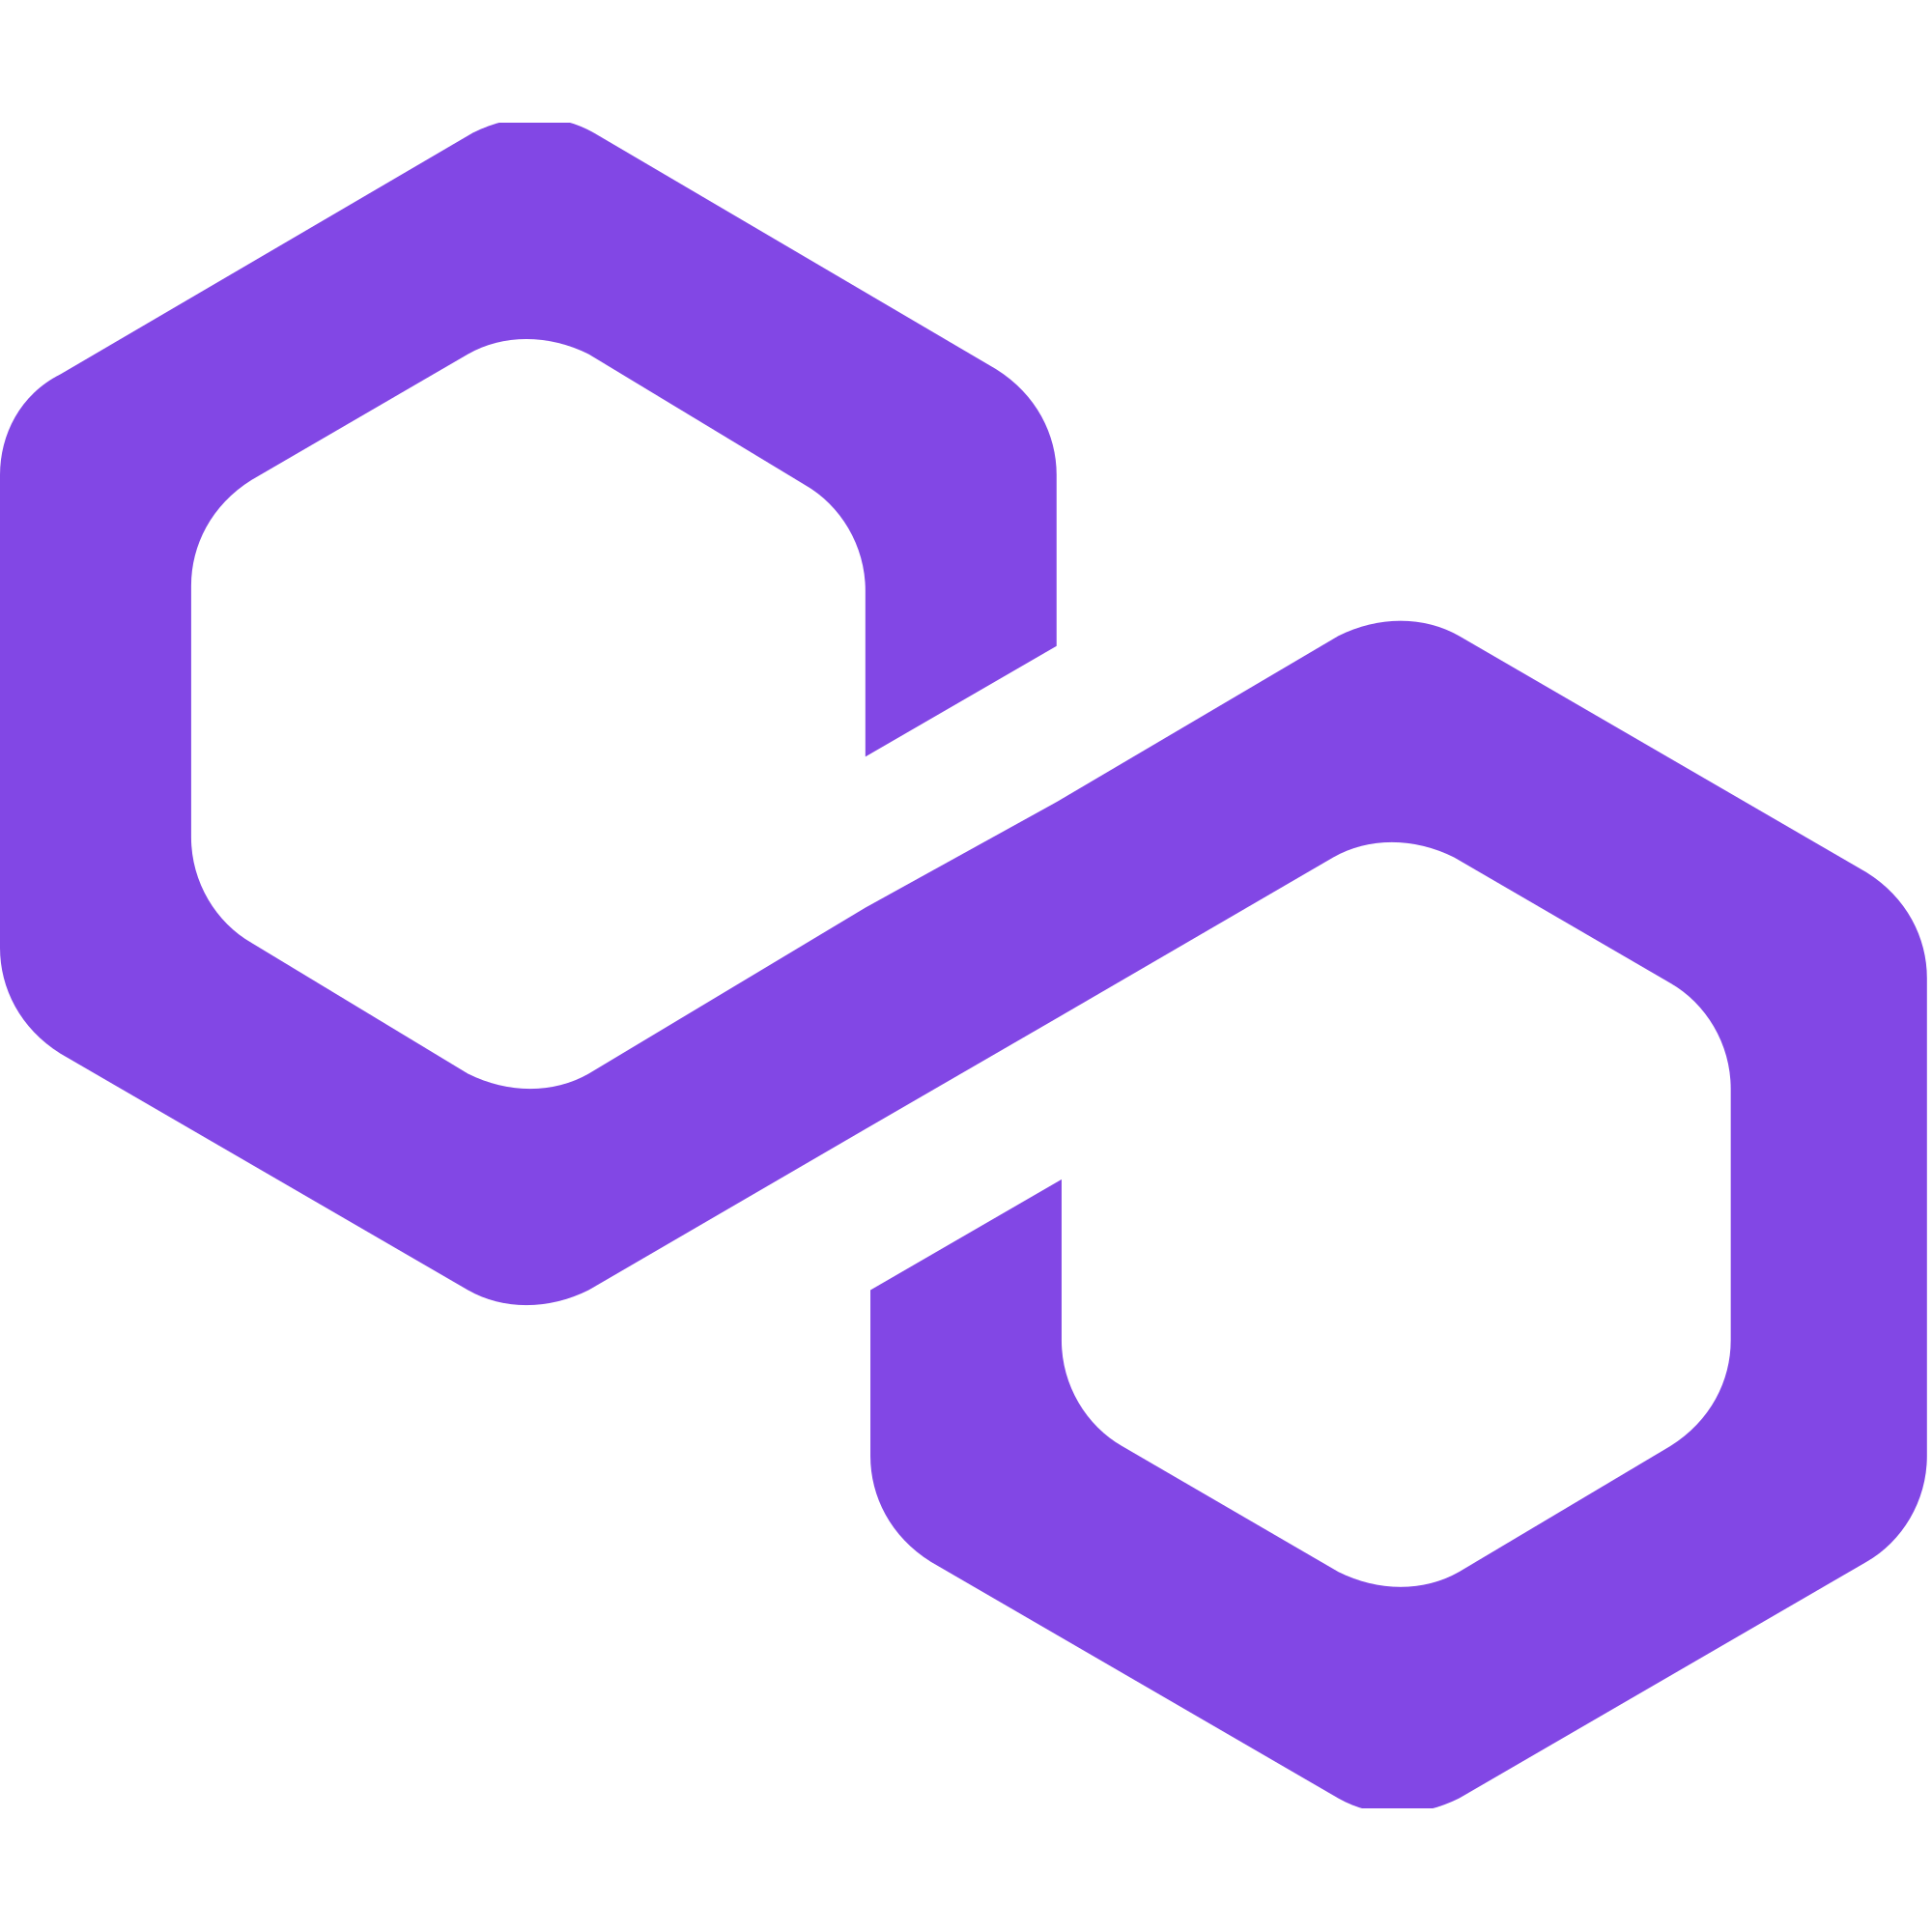 polygon-matic-logo